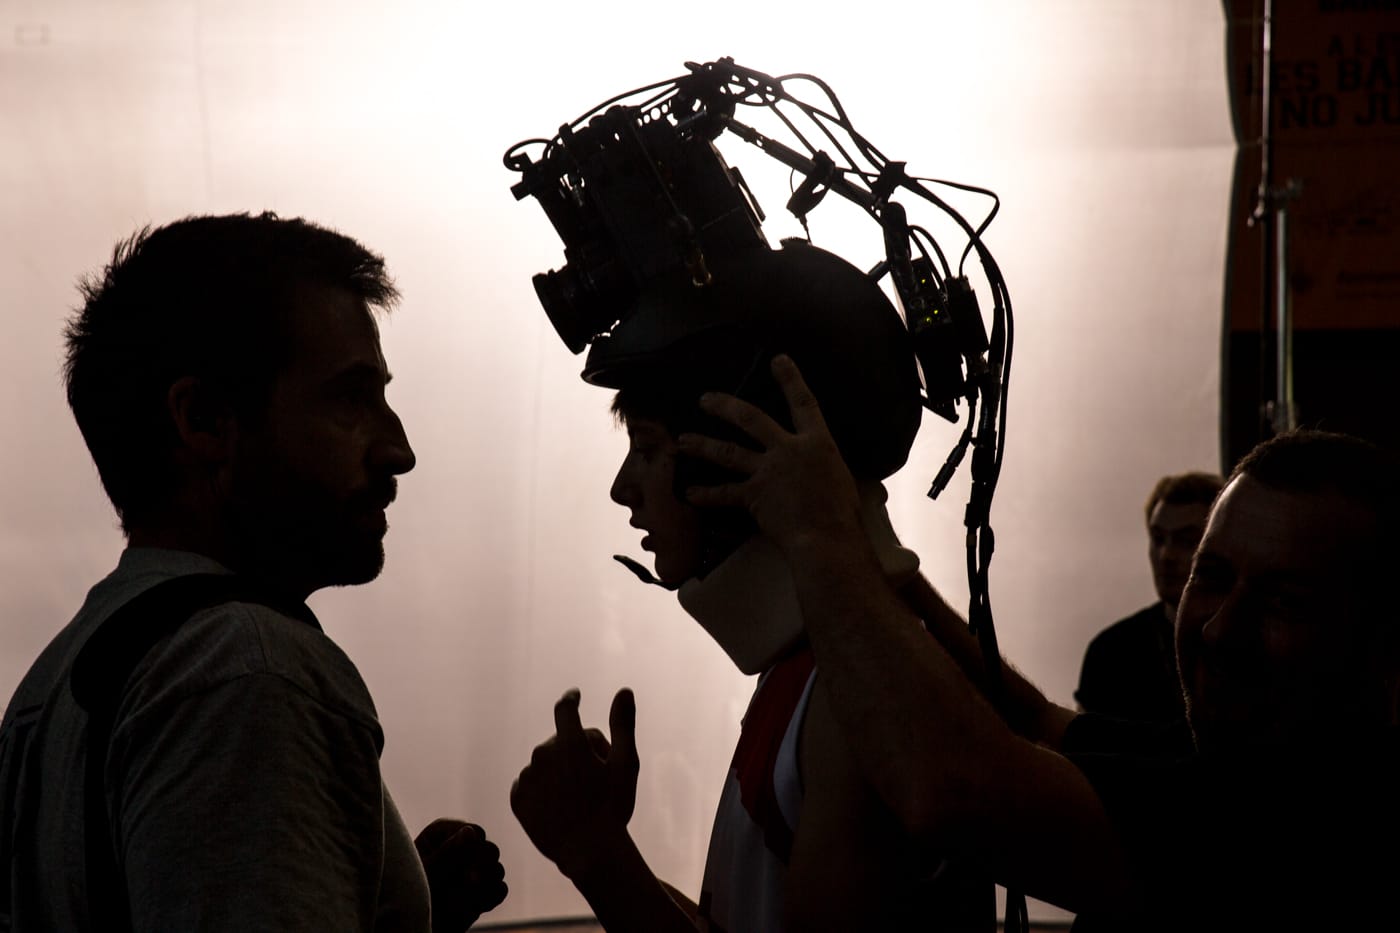 Film production crew member installing helmet camera on basketball player